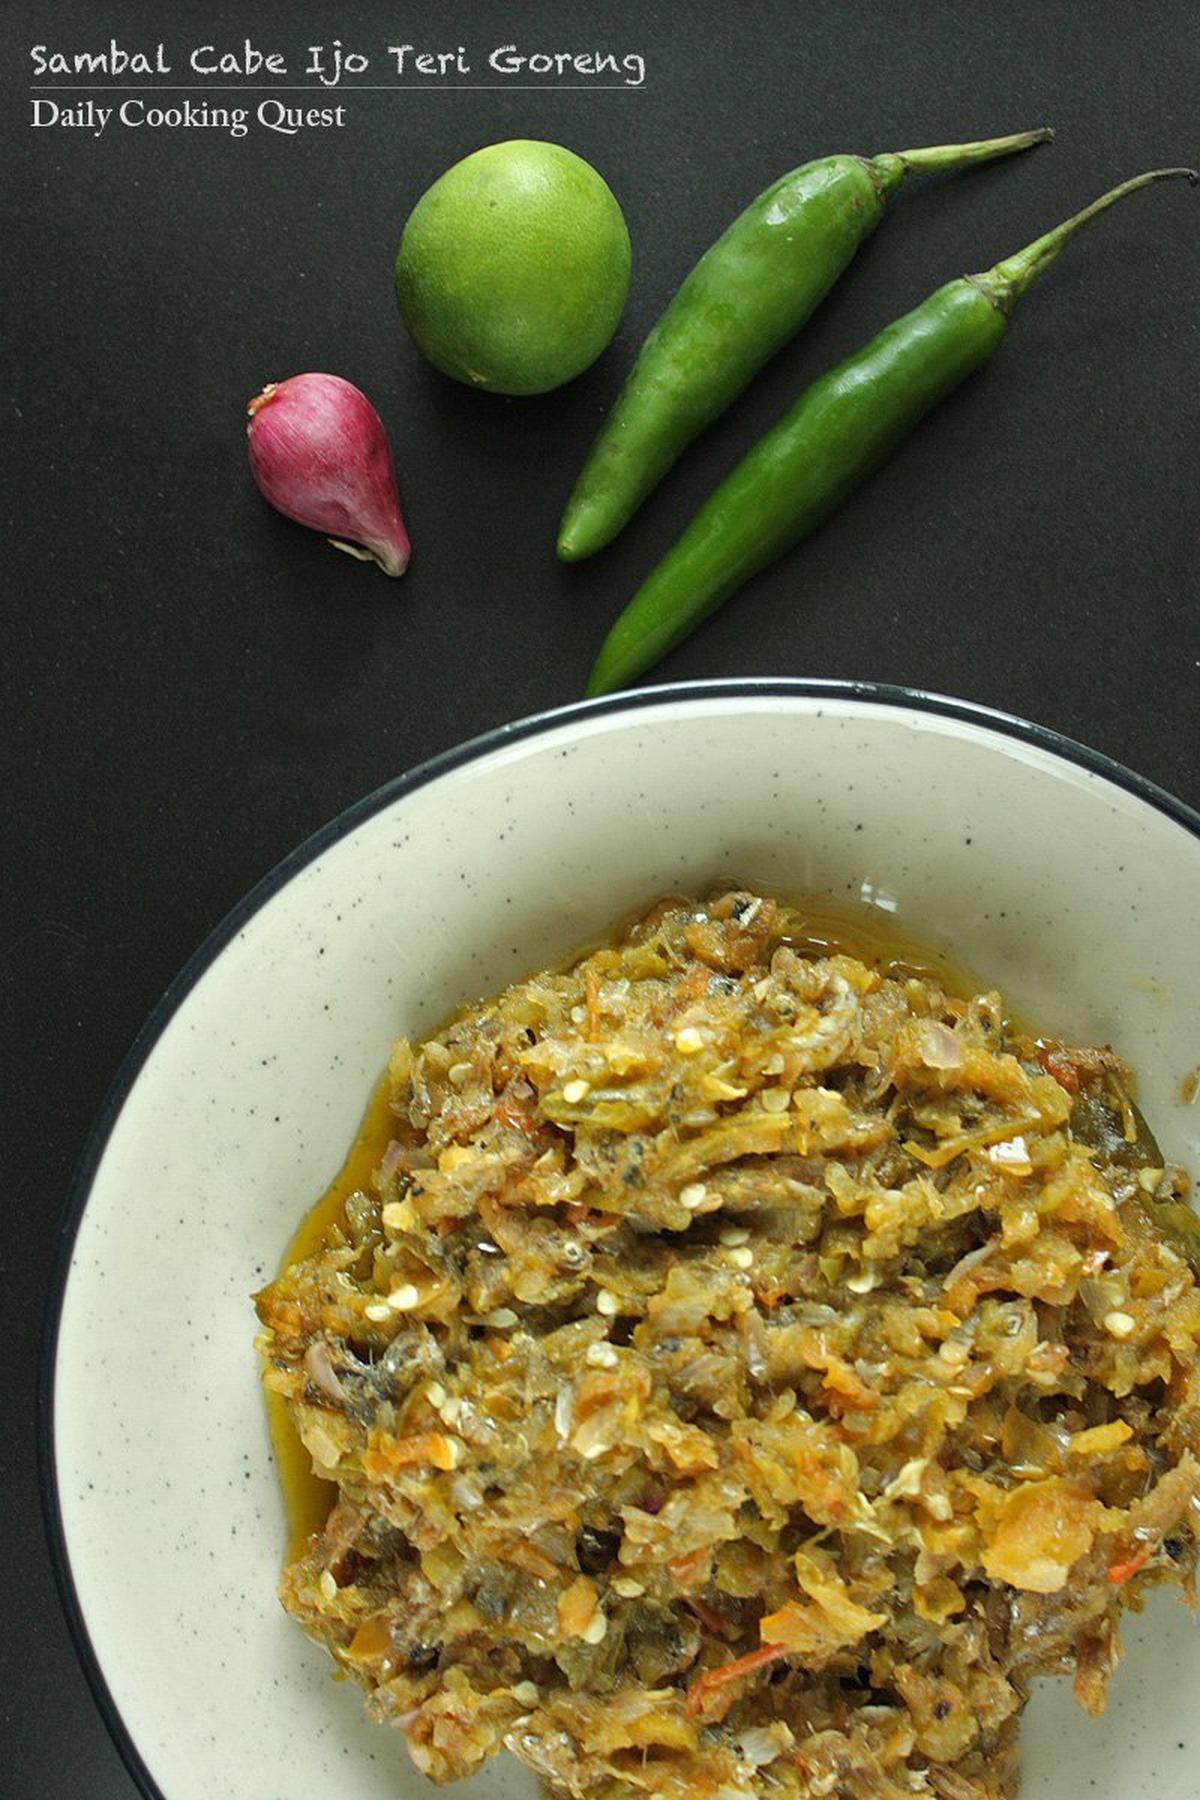 Sambal Cabe Ijo Teri Goreng - Fried Anchovies in Green Chili Sauce